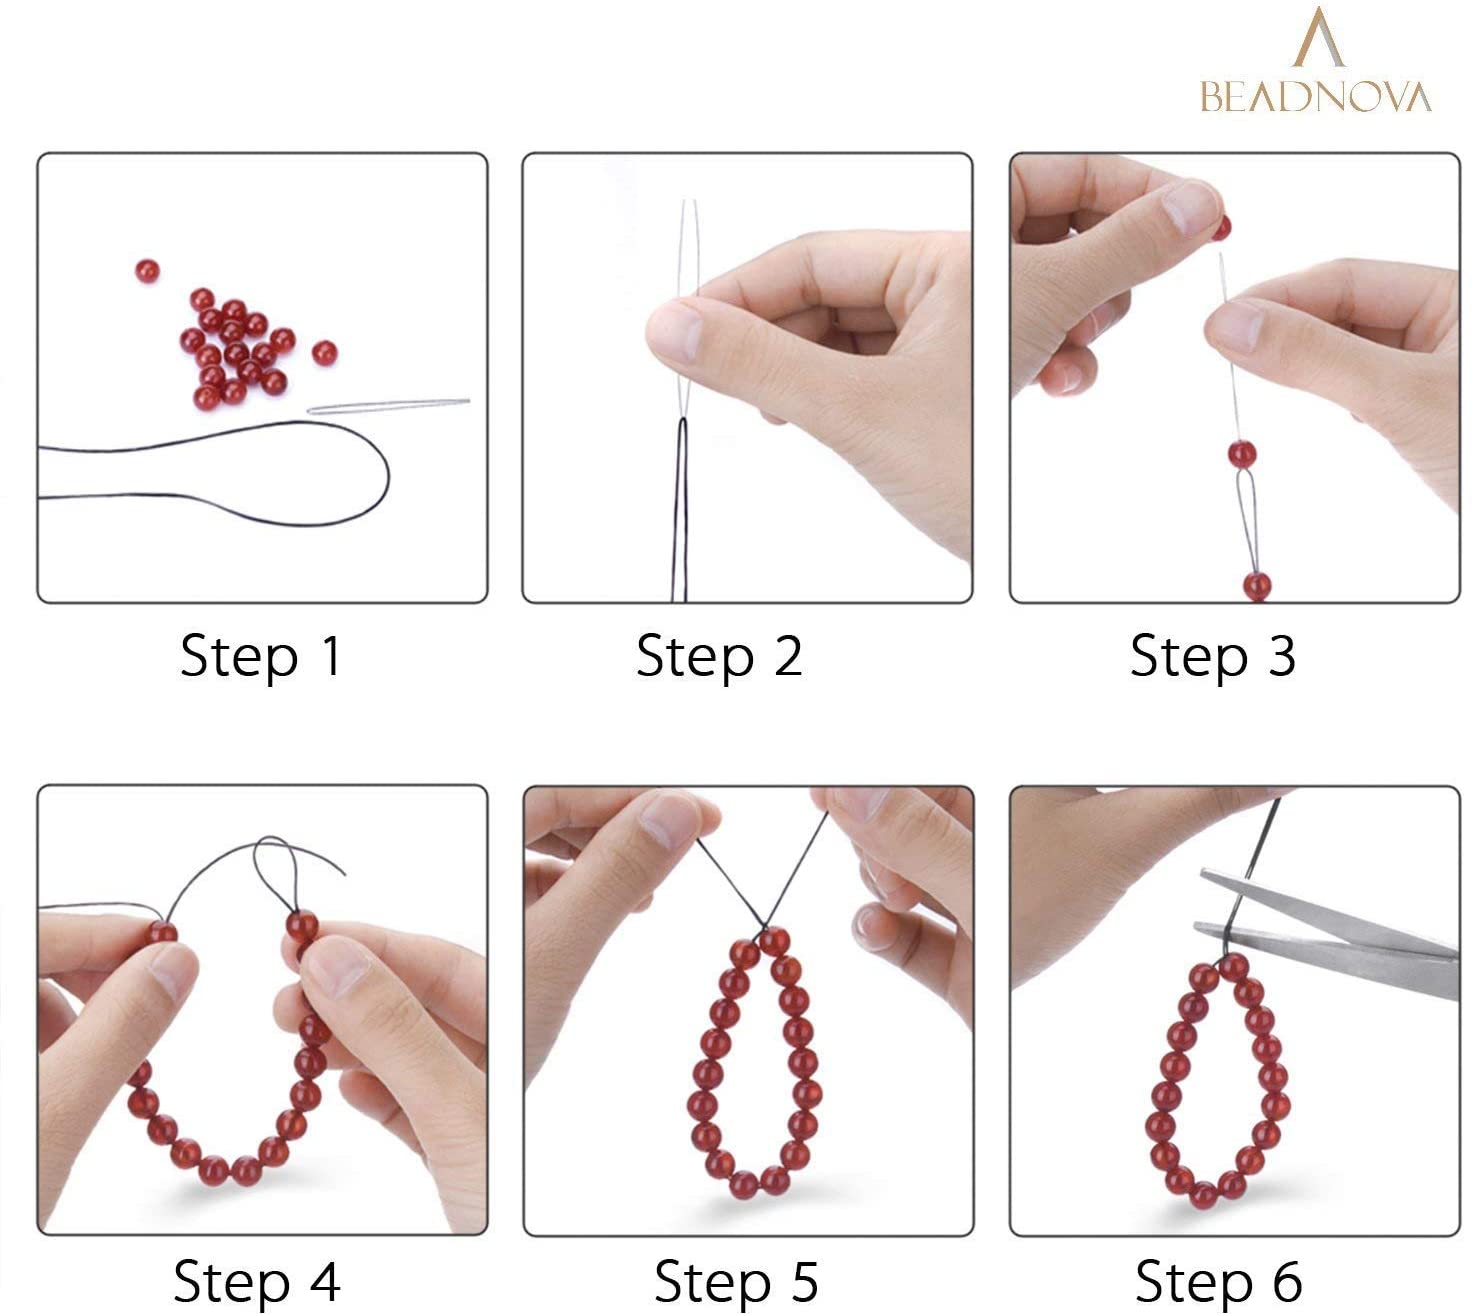 How to Make a Basic Square Knot Bracelet | DIY Pura Vida Friendship  Bracelets - YouTube